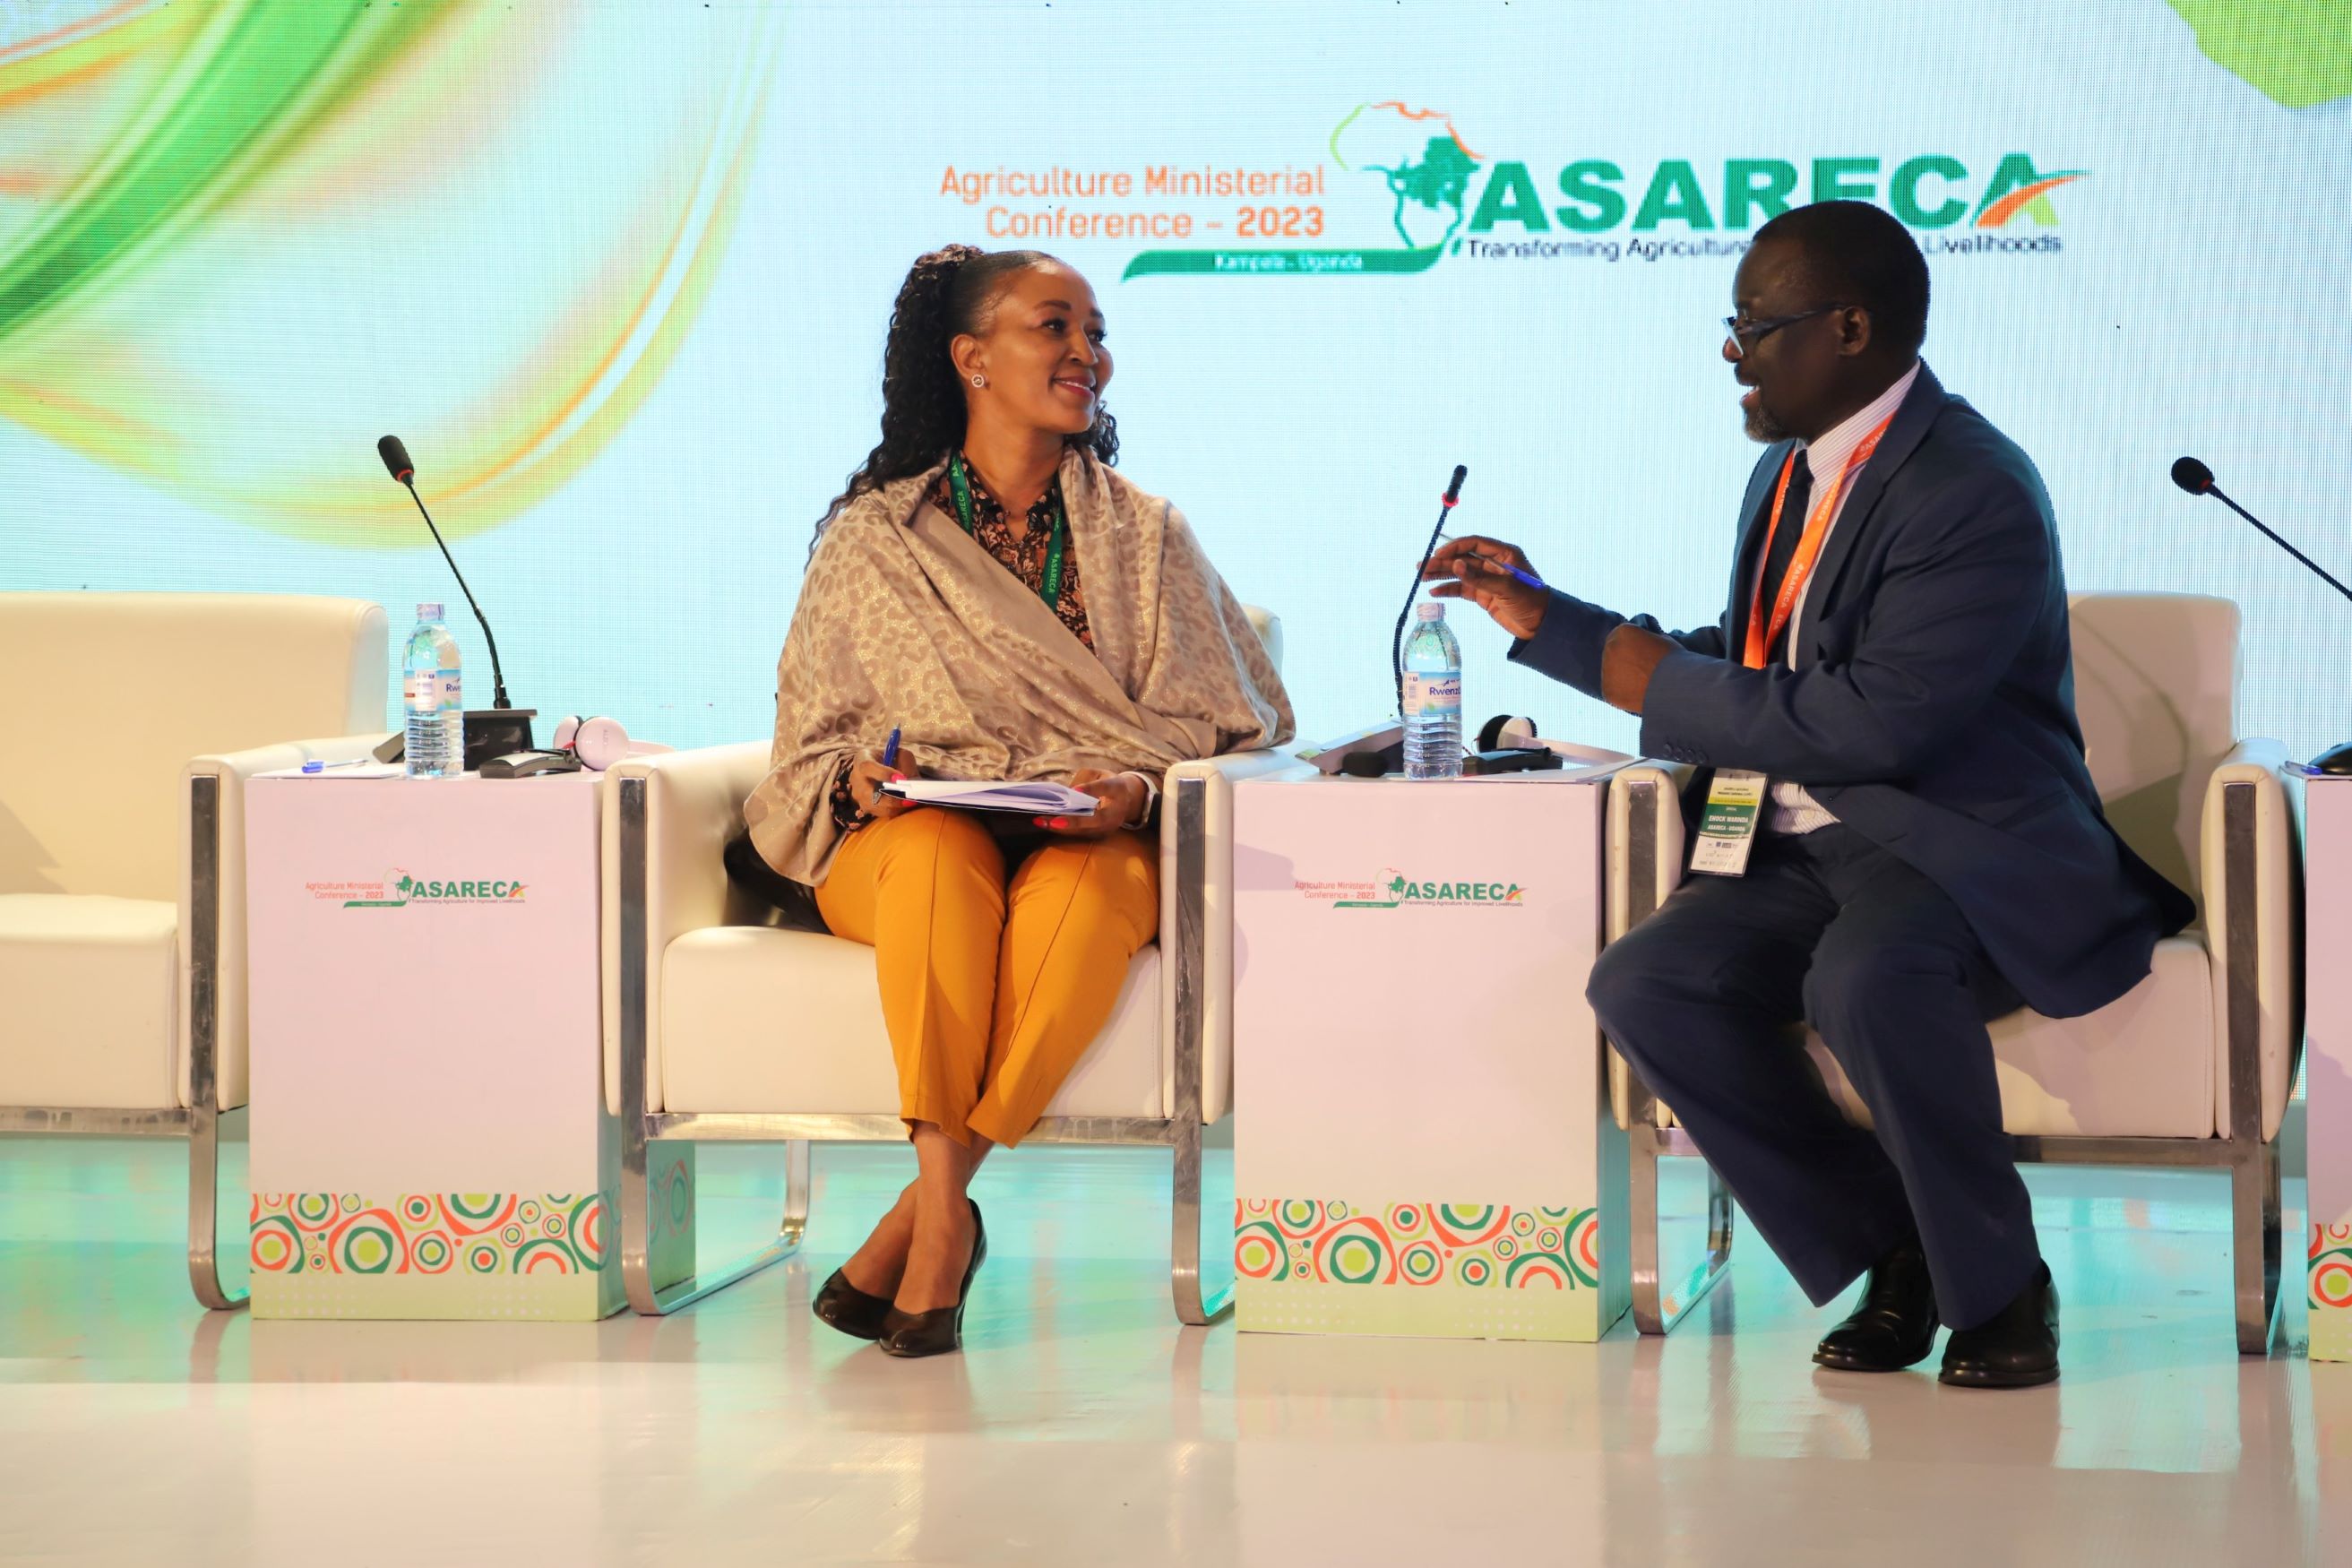 ASARECA Executive Director, Dr. Enock Warinda and DE Africa’s Managing Director, Dr. Thembi Xaba, sign a MoU at the ASARECA Agricultural Ministerial Conference 2023